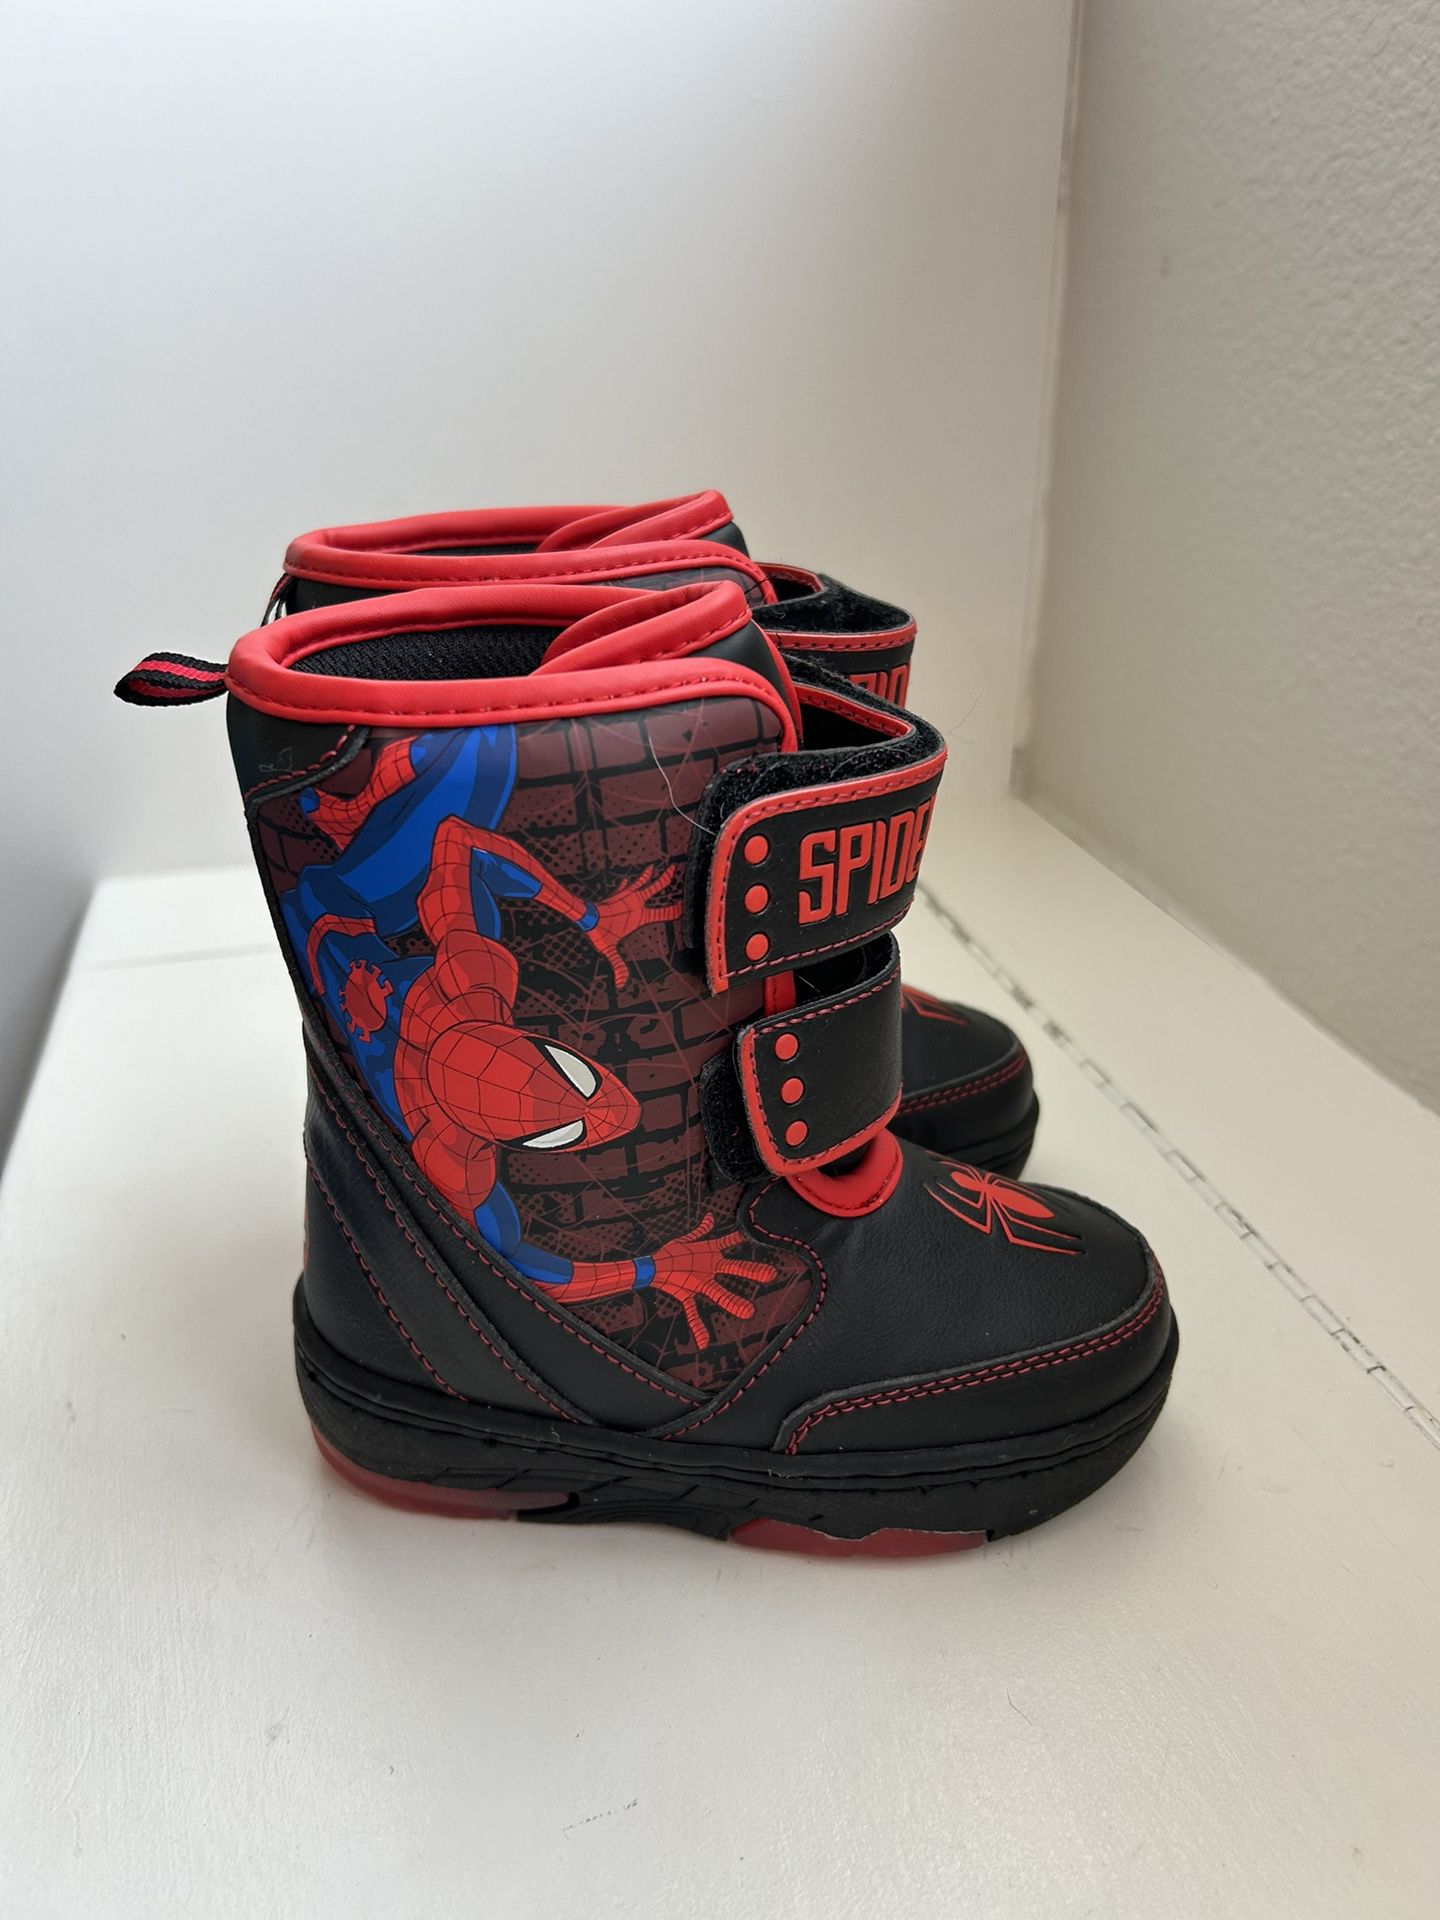 Toddler Size 8 Spider-Man Boot